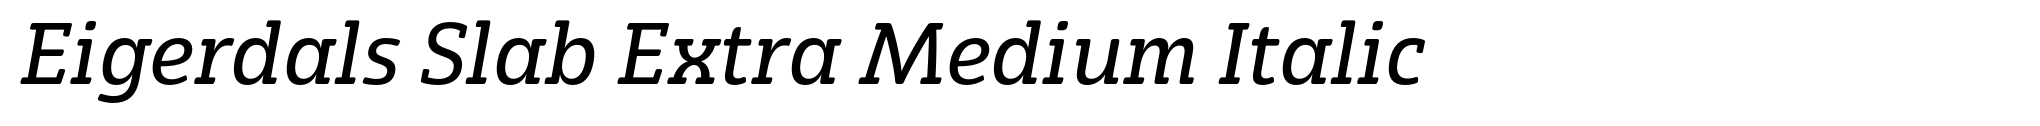 Eigerdals Slab Extra Medium Italic image